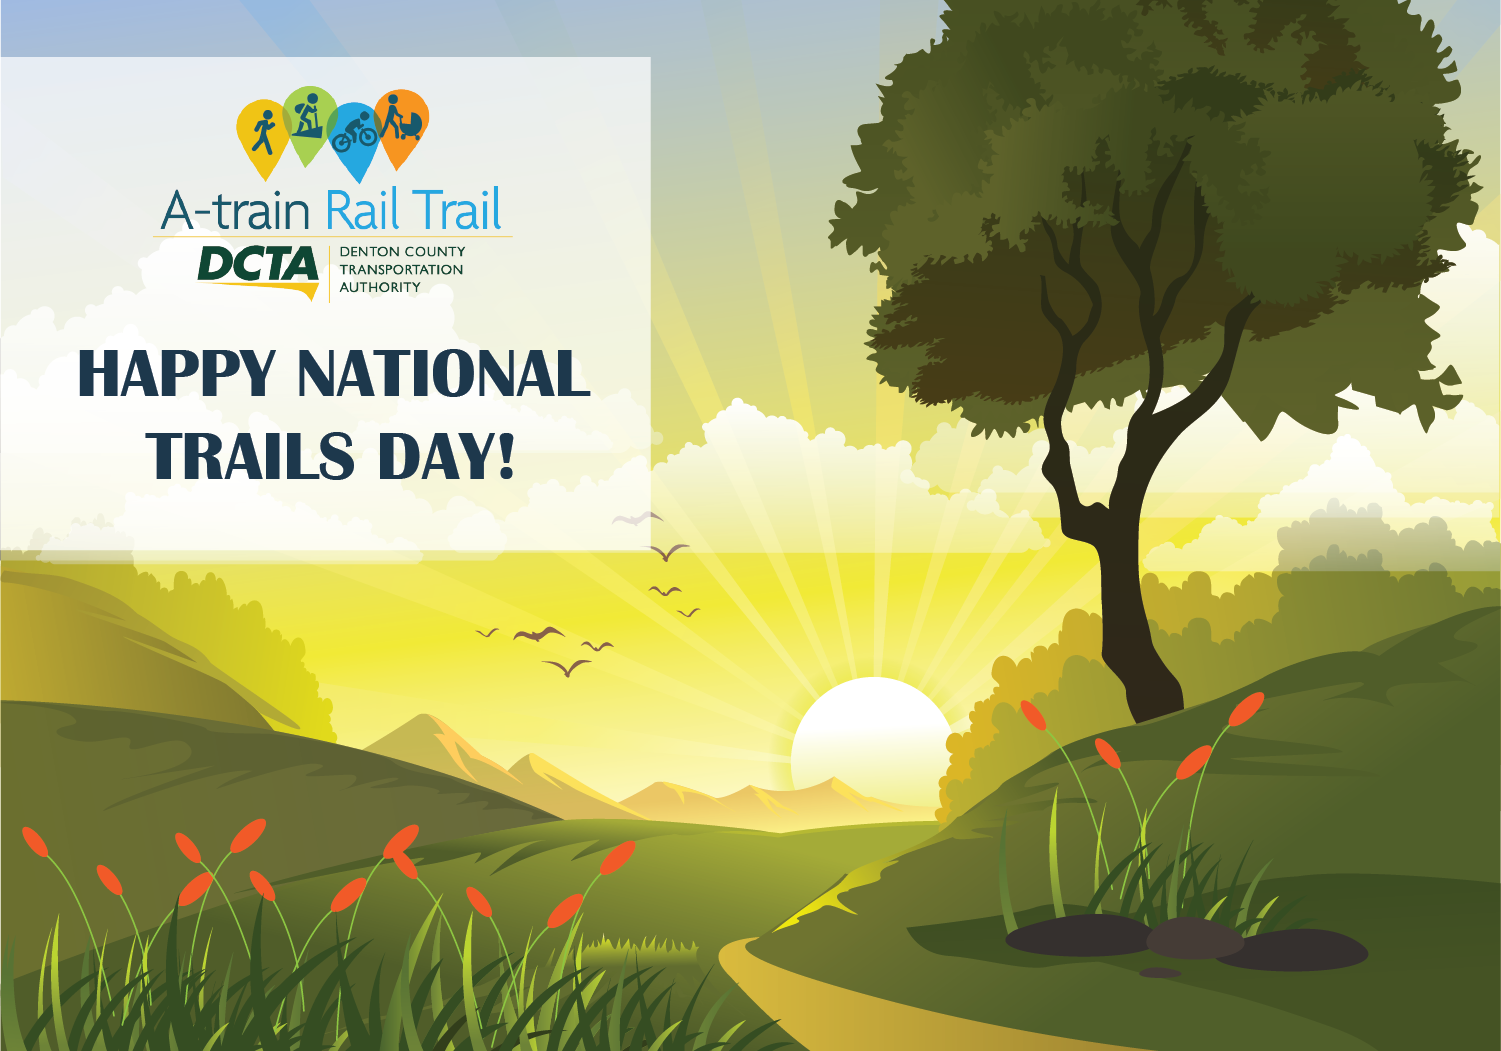 Follow That Trail: National Trails Day on the A-train Rail Trail